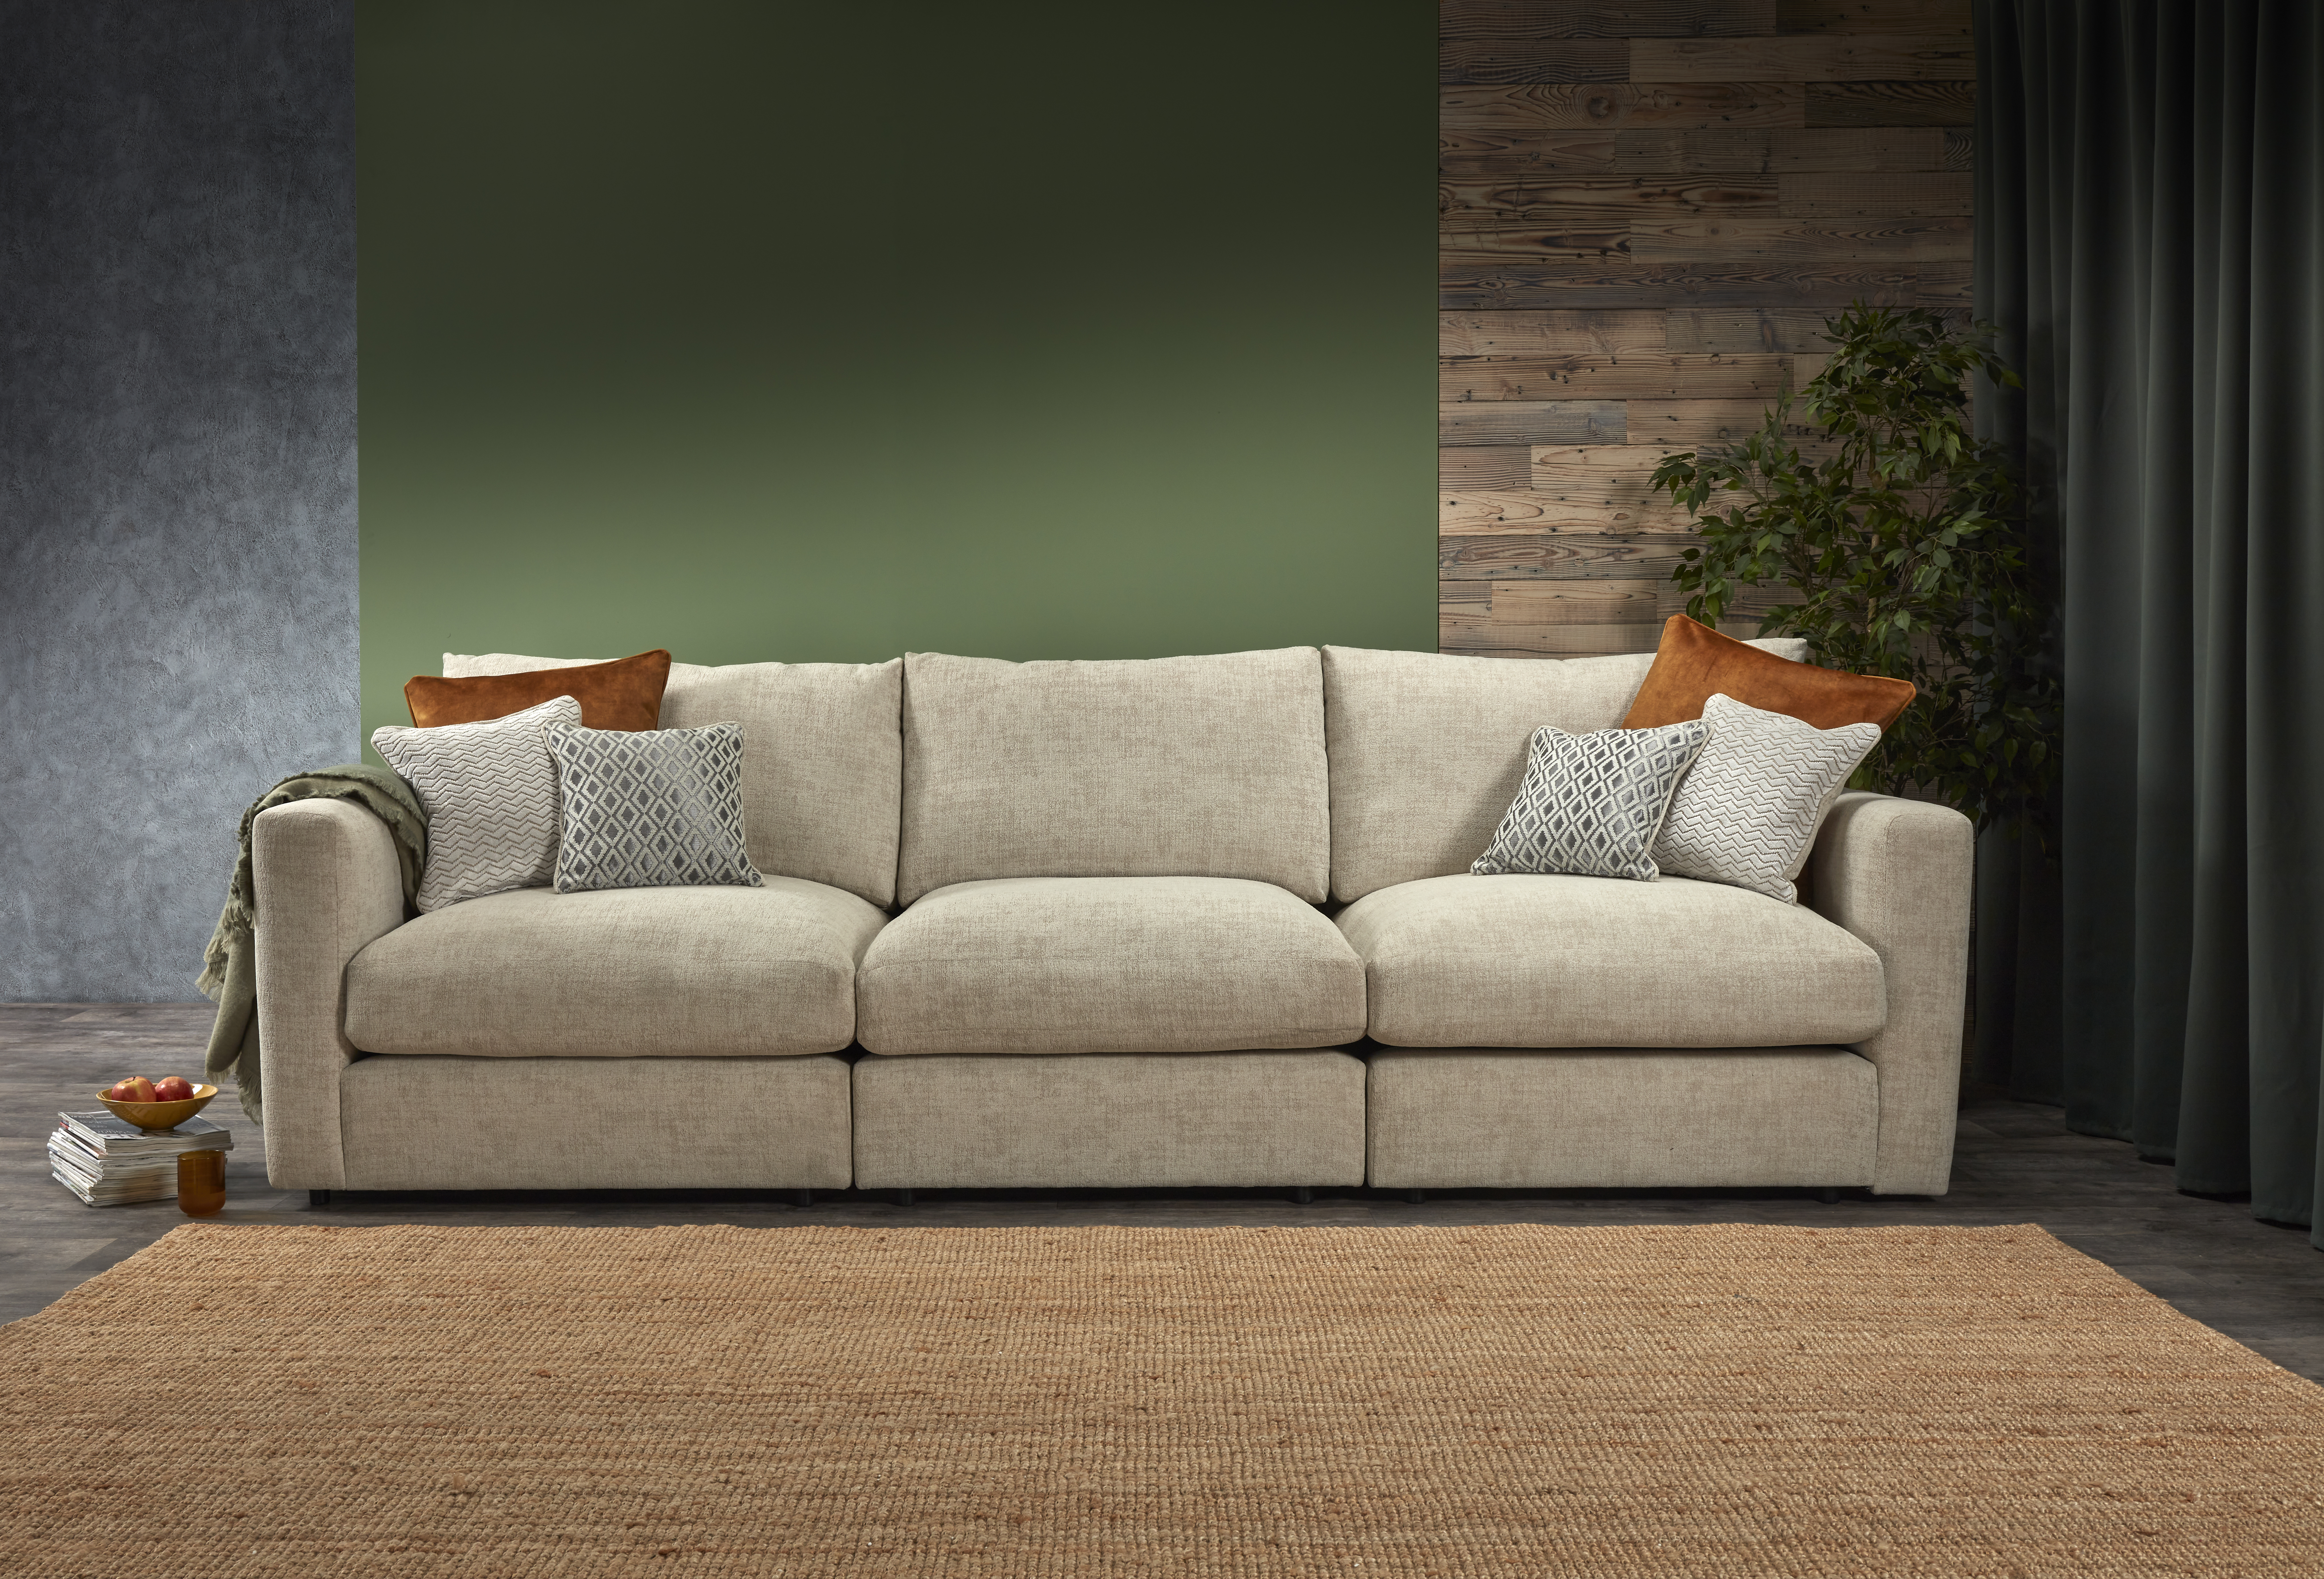 Large beige sofa in green living room